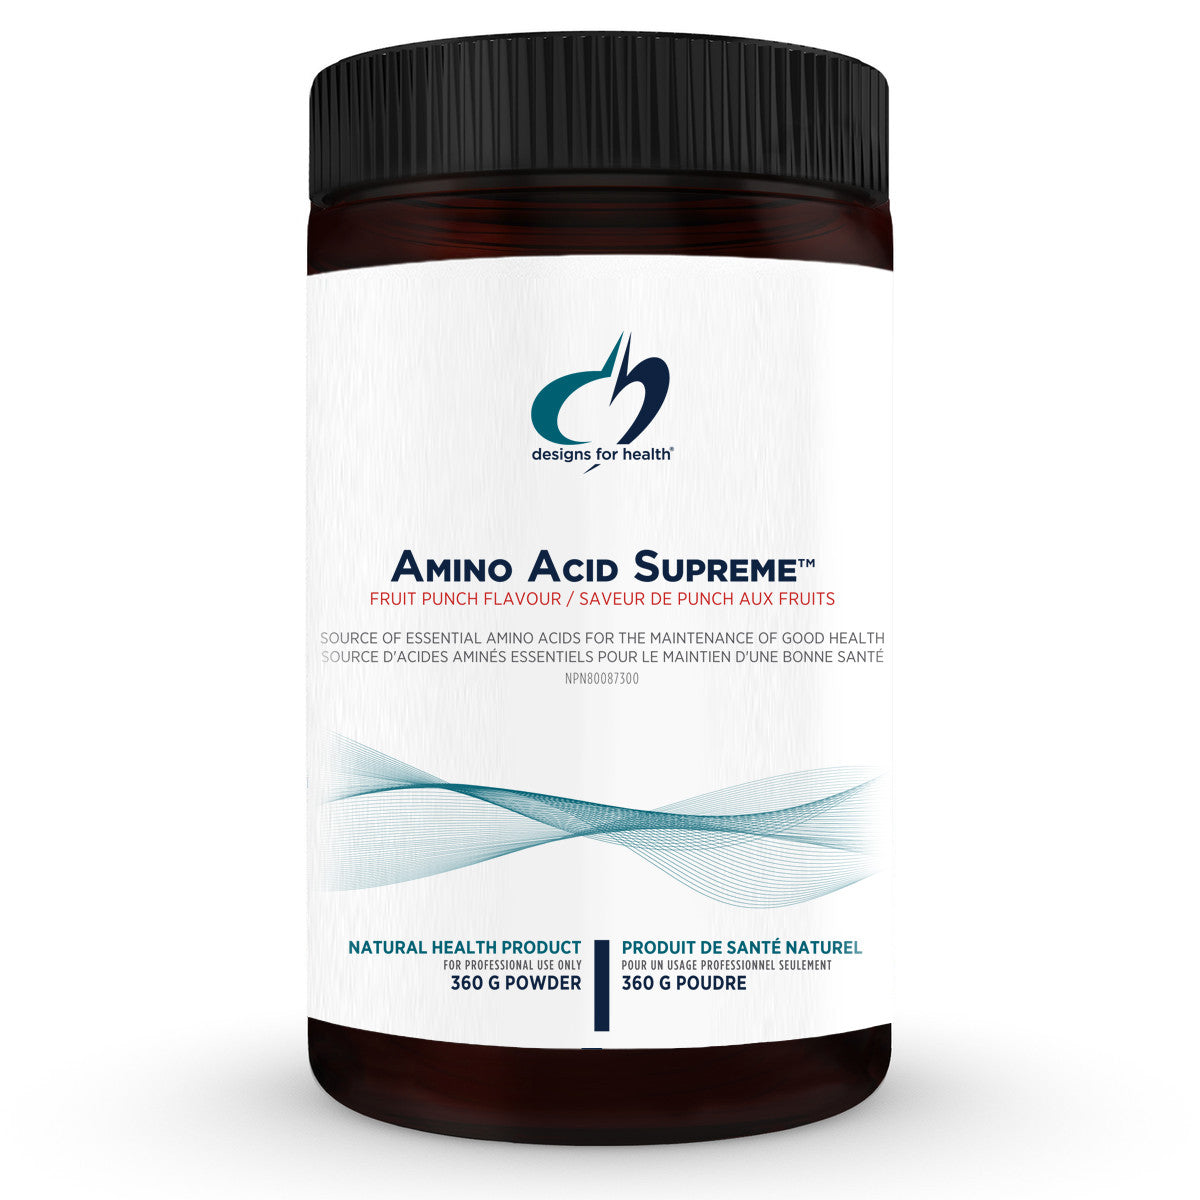 Amino Acid Supreme